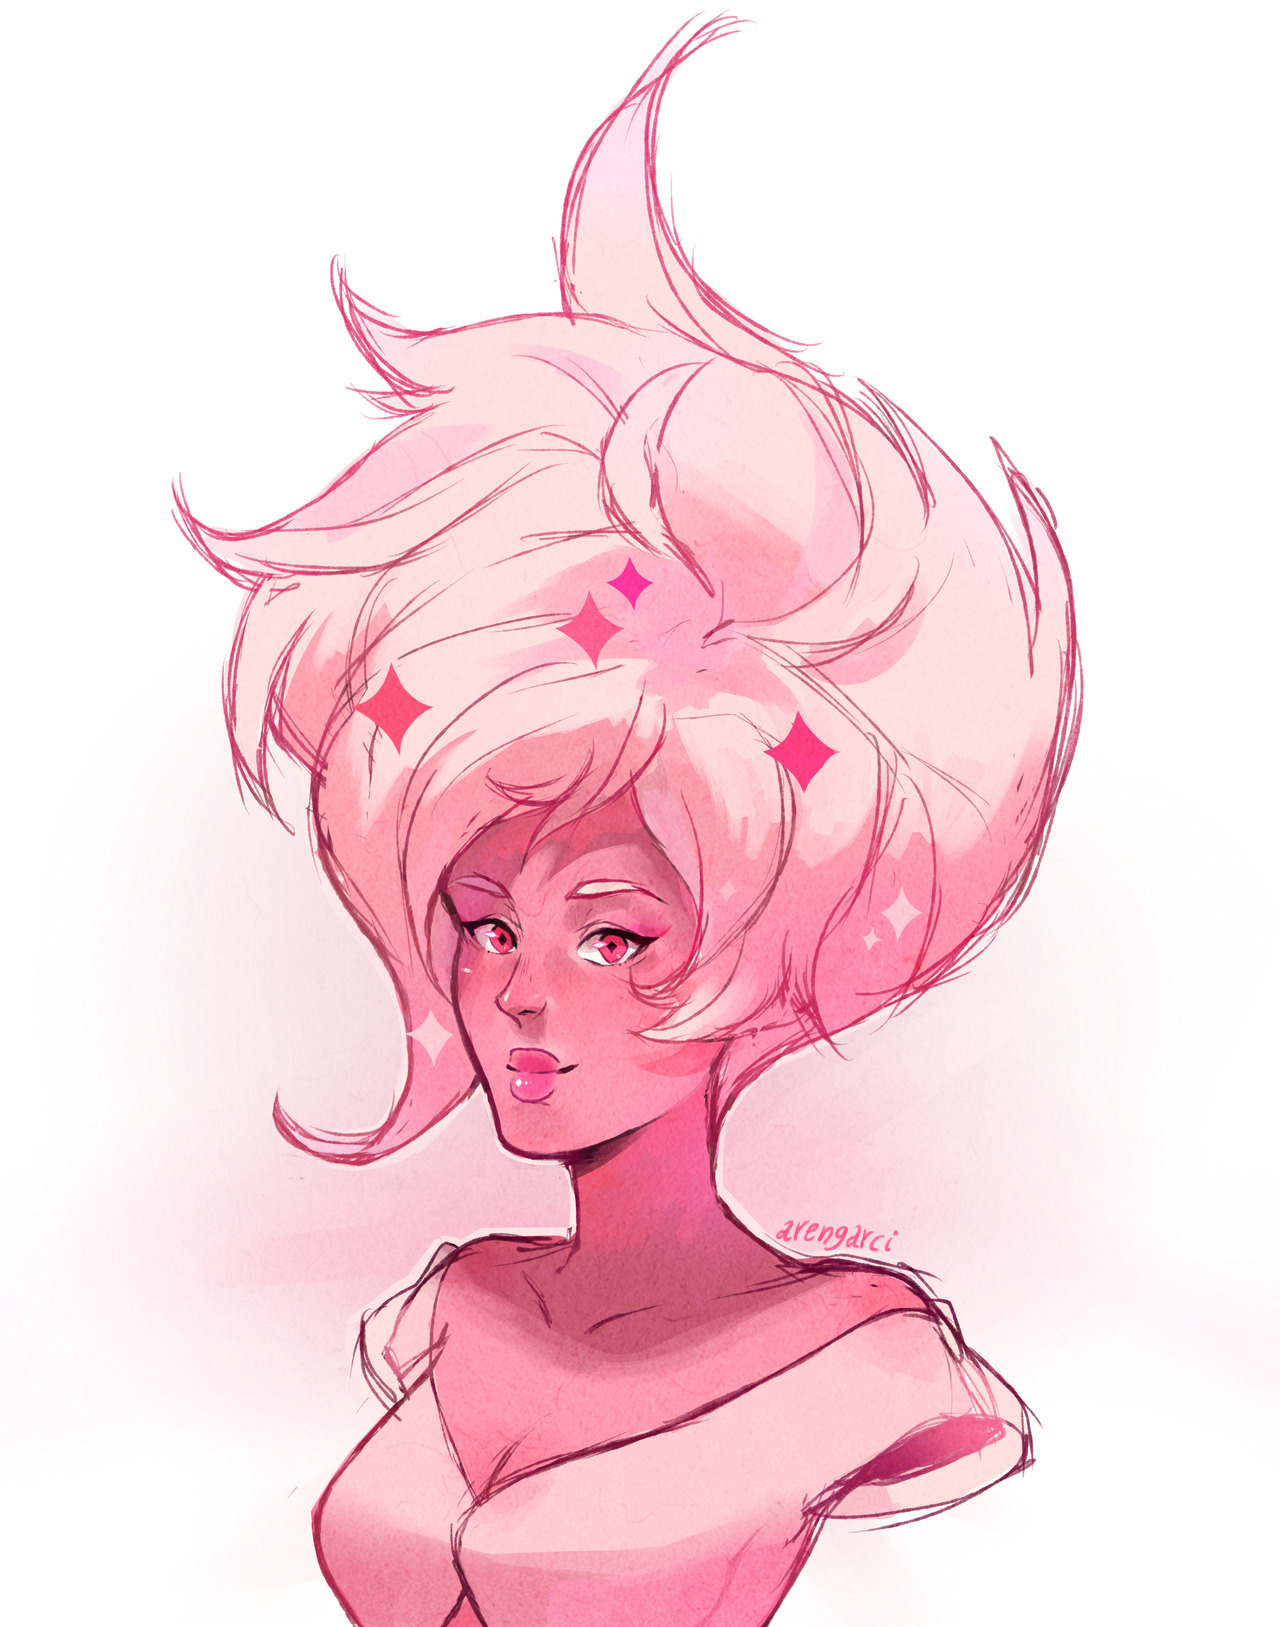 I love Pink Diamond’s beta design, wish she had that hair